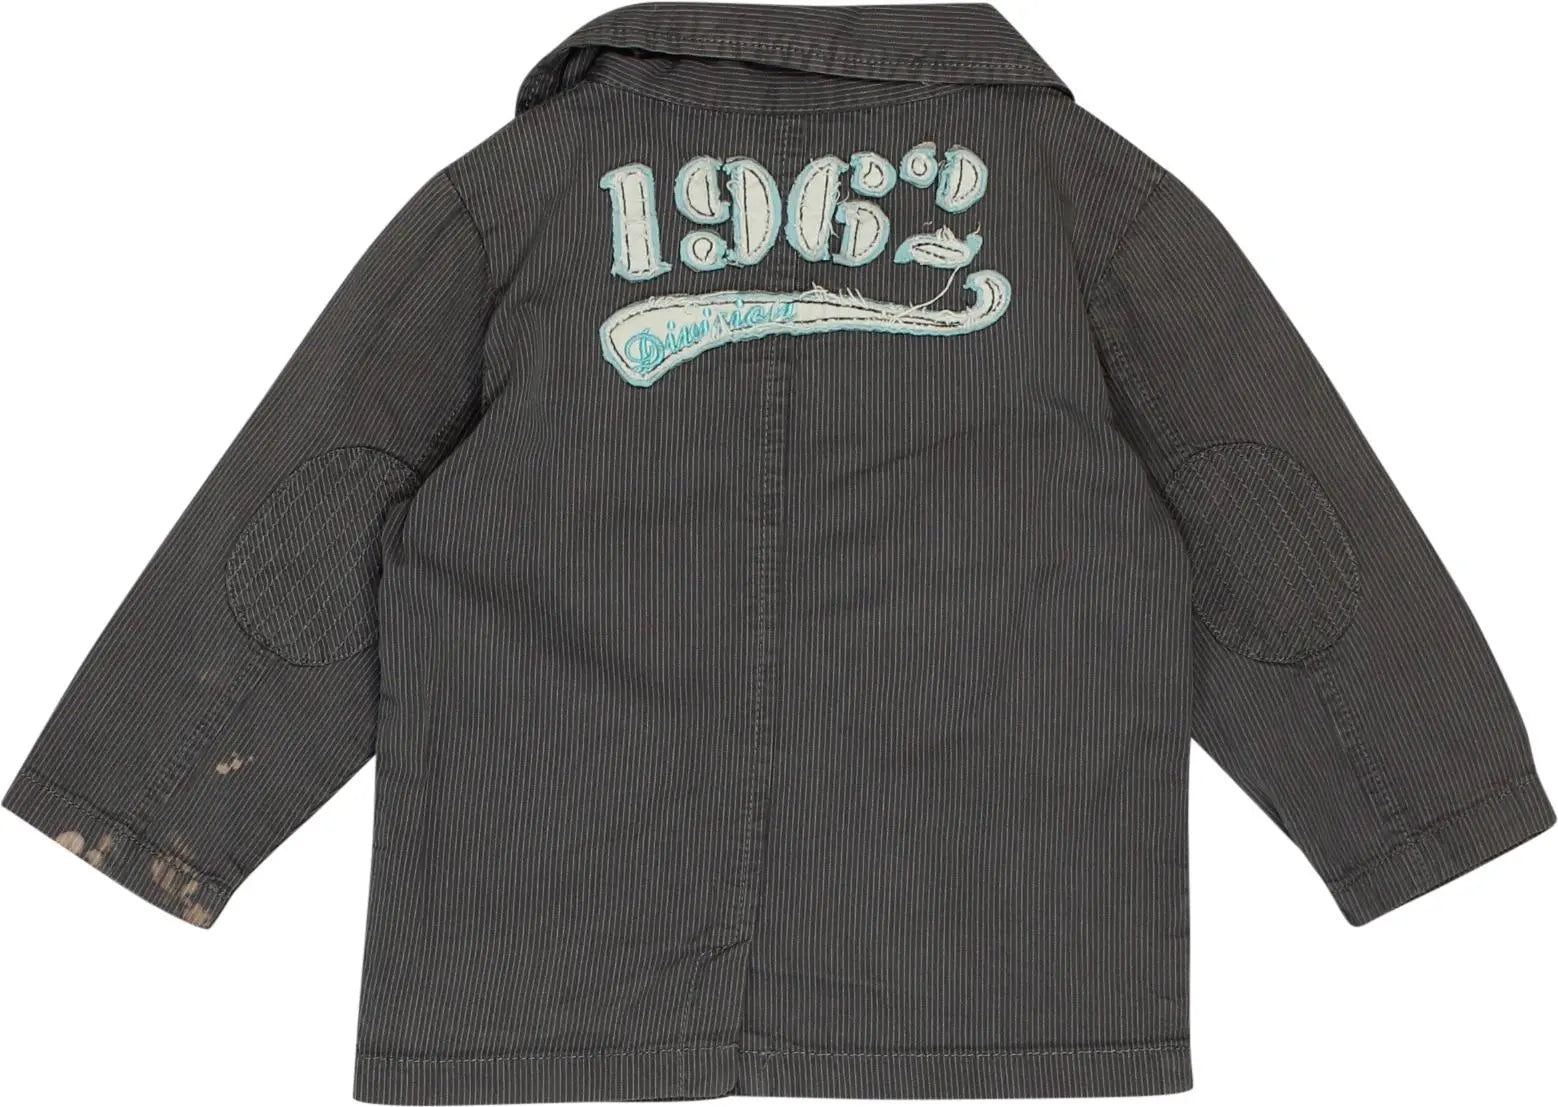 Prénatal - Jacket- ThriftTale.com - Vintage and second handclothing